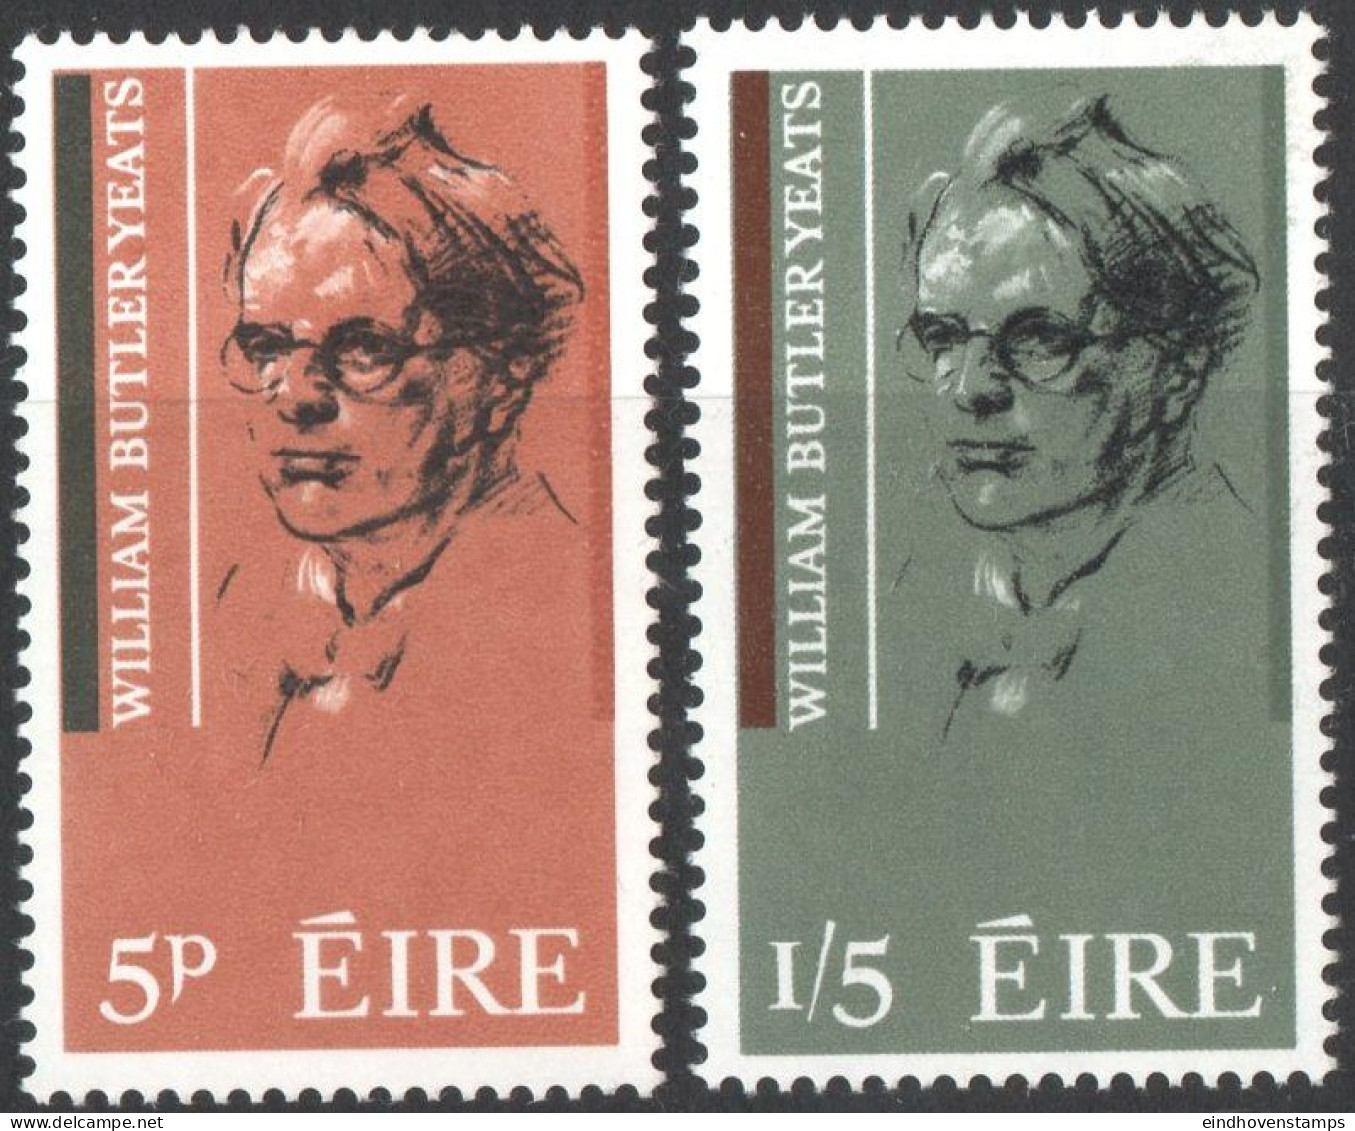 Eire 1965 William Butler Yeats, Writer, 2 Values MNH Ireland Portrait By Sean O'Sullivan - Writers